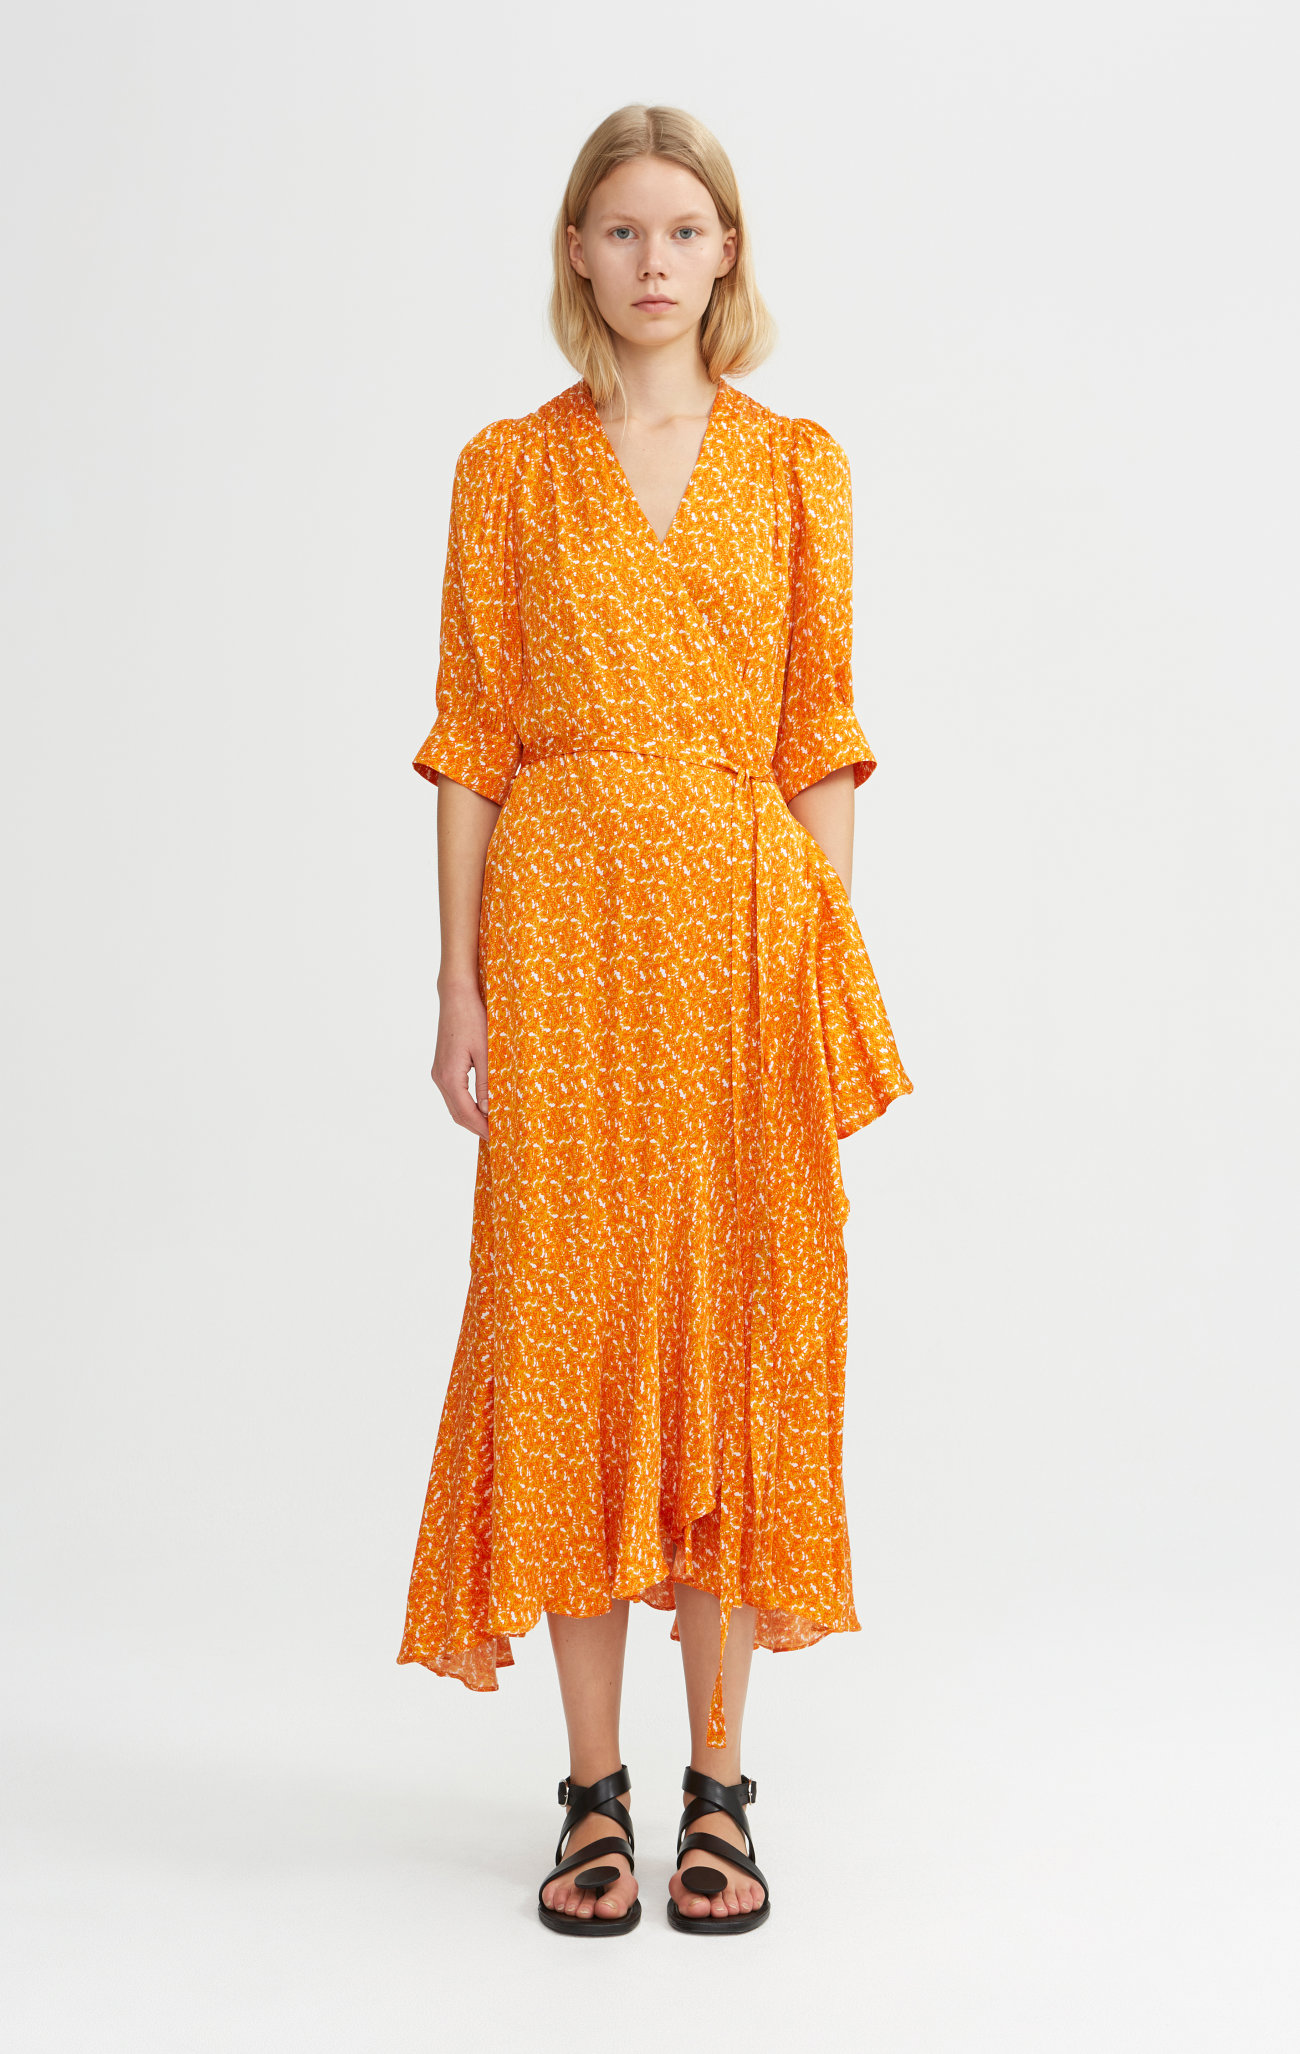 rodebjer orange dress